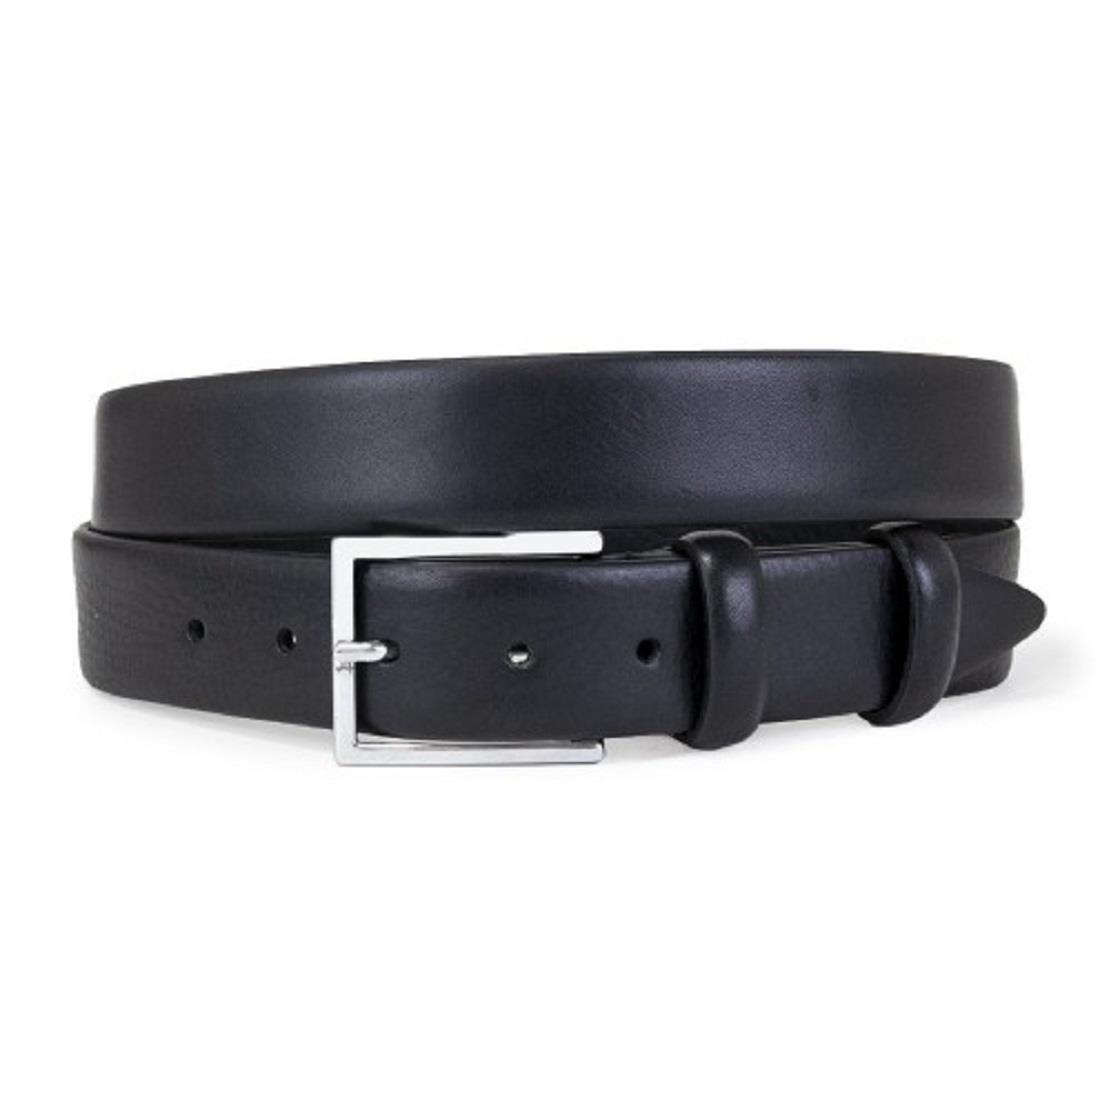 Black leather belt - PIEROTUCCI